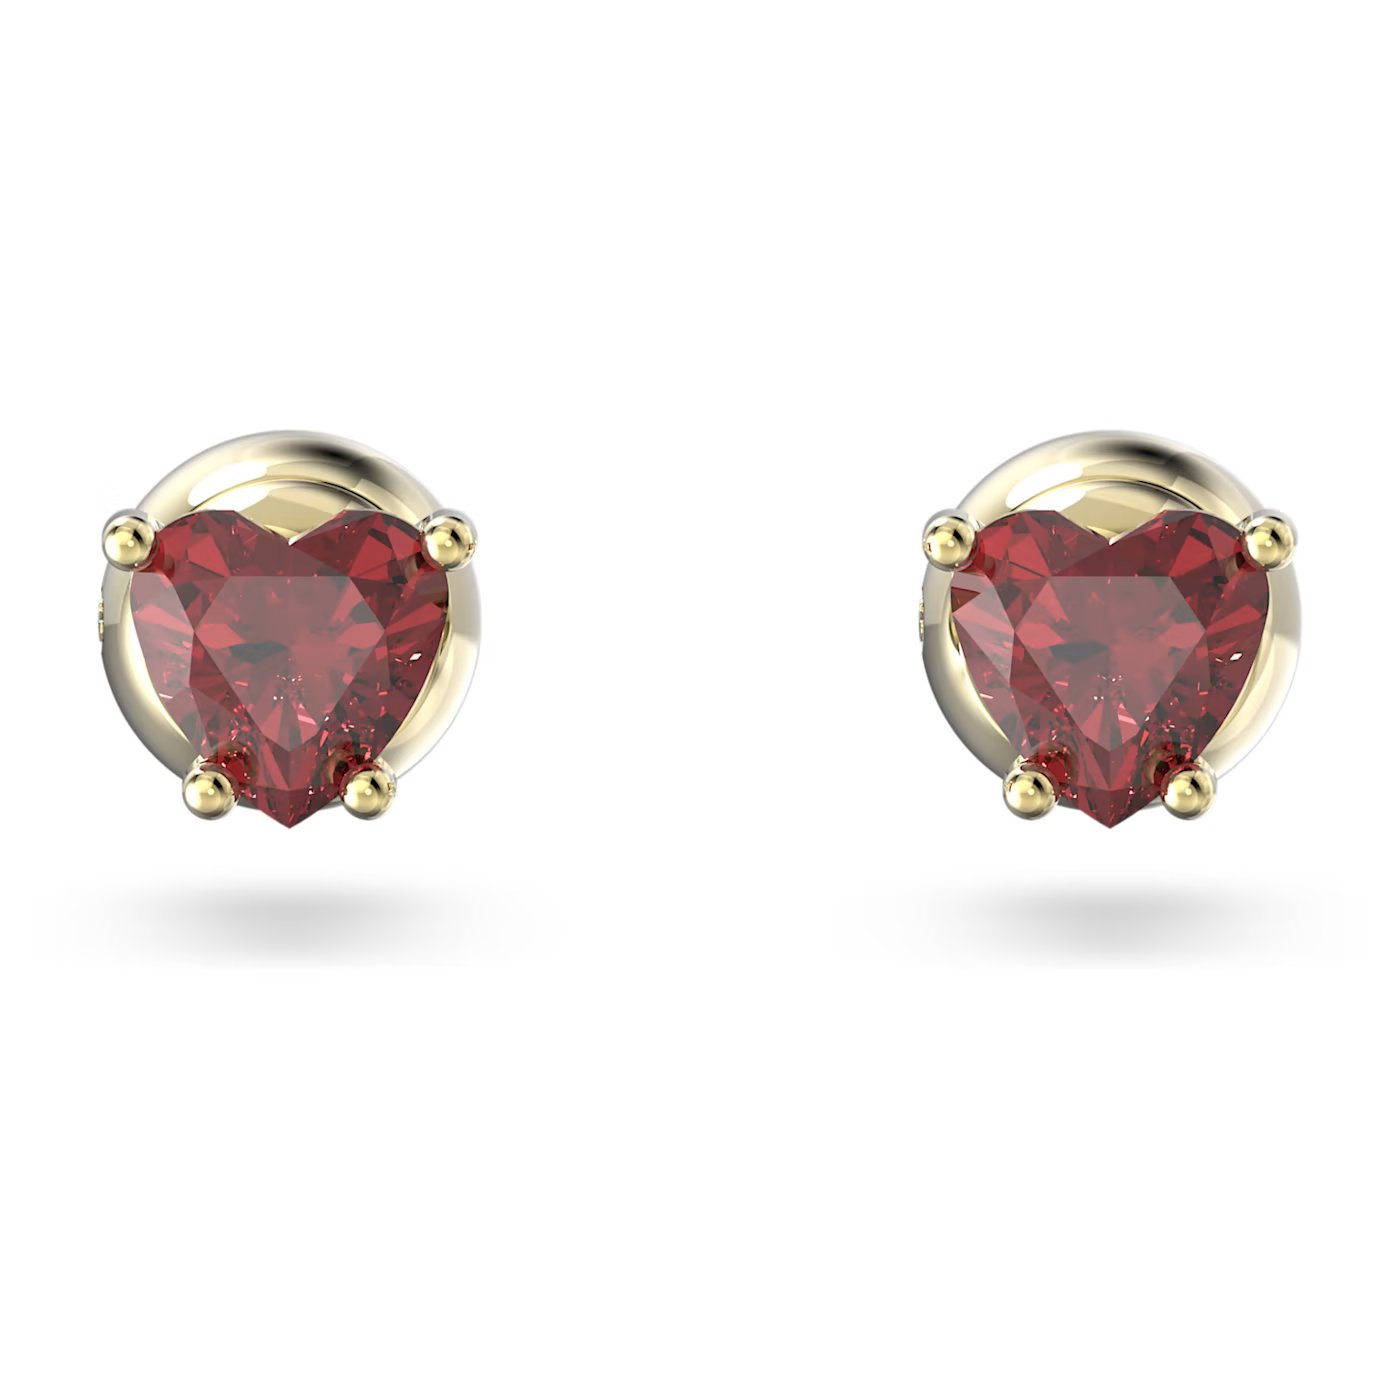 6332986e66b44_px-stilla-stud-earrings--heart--red--gold-tone-plated-swarovski-5639133.jpg